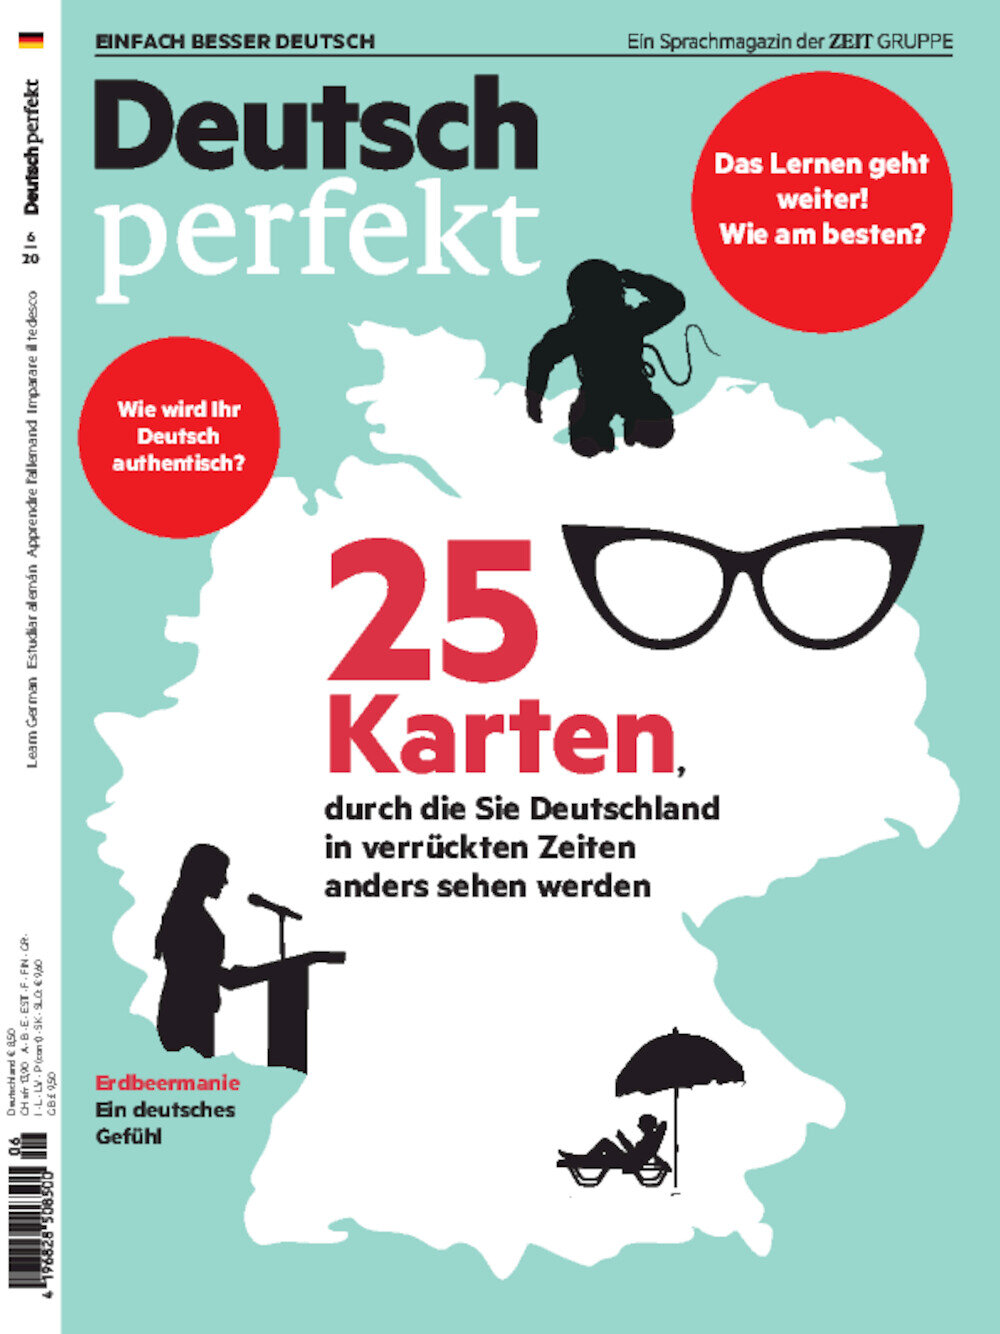 Deutsch perfekt ePaper 06/2020